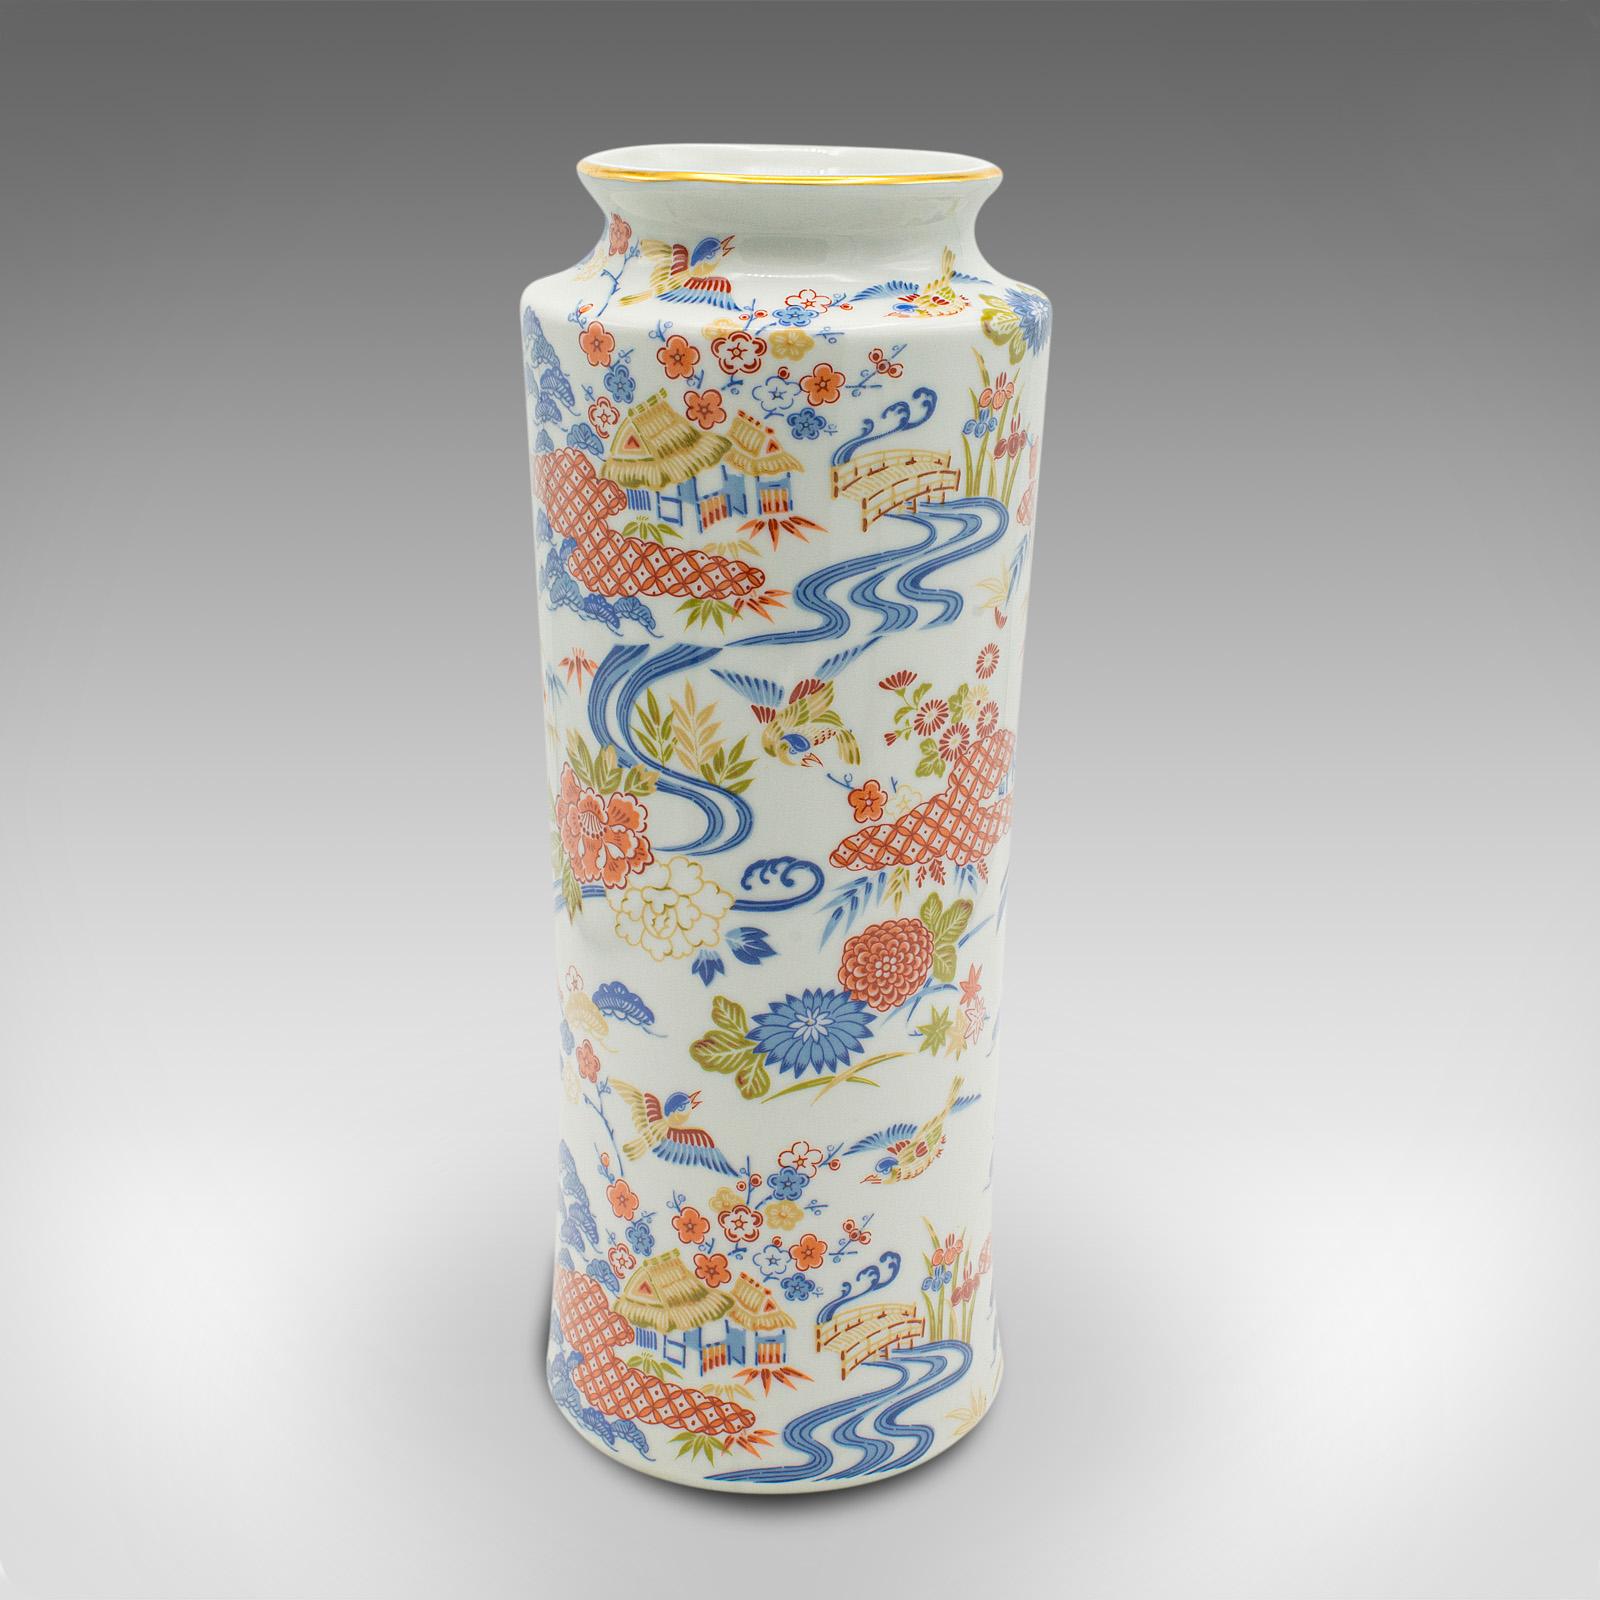 Vintage Decorative Flower Vase, Chinese, Ceramic, Stem Sleeve, Art Deco Revival In Good Condition For Sale In Hele, Devon, GB